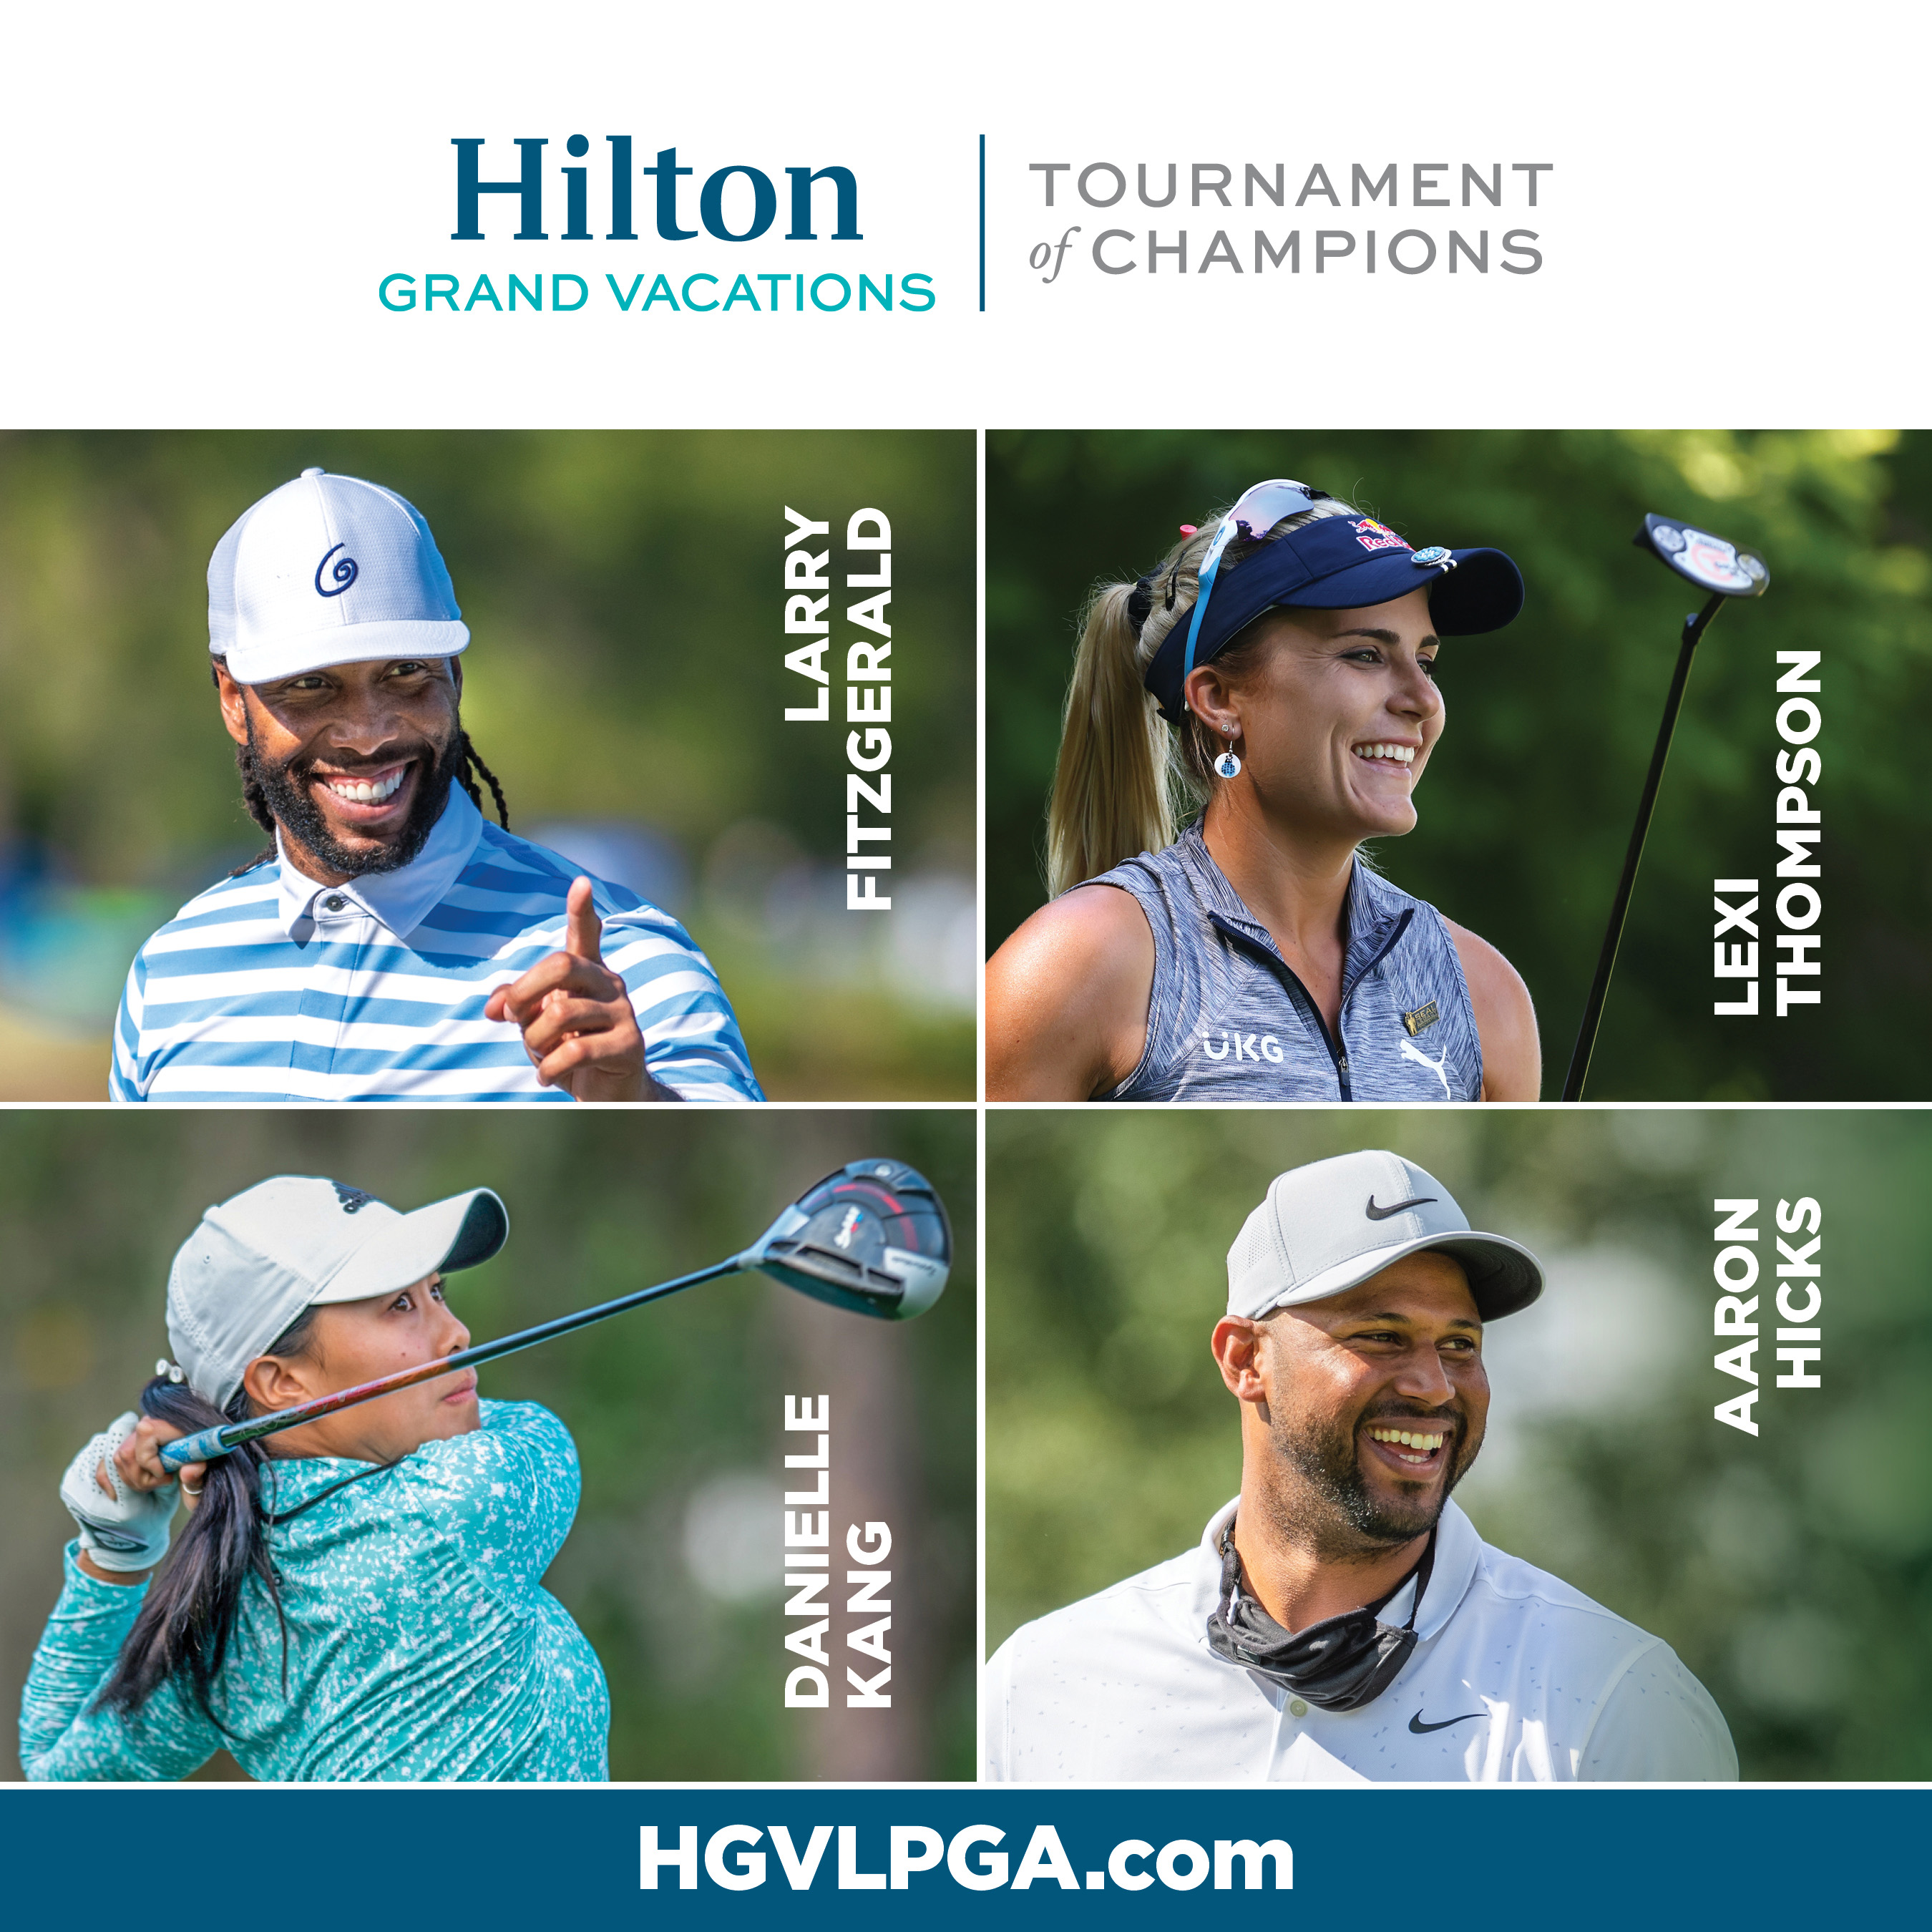 The Hilton Grand Vacations Tournament of Champions returns in 2022. HGVLPGA.com